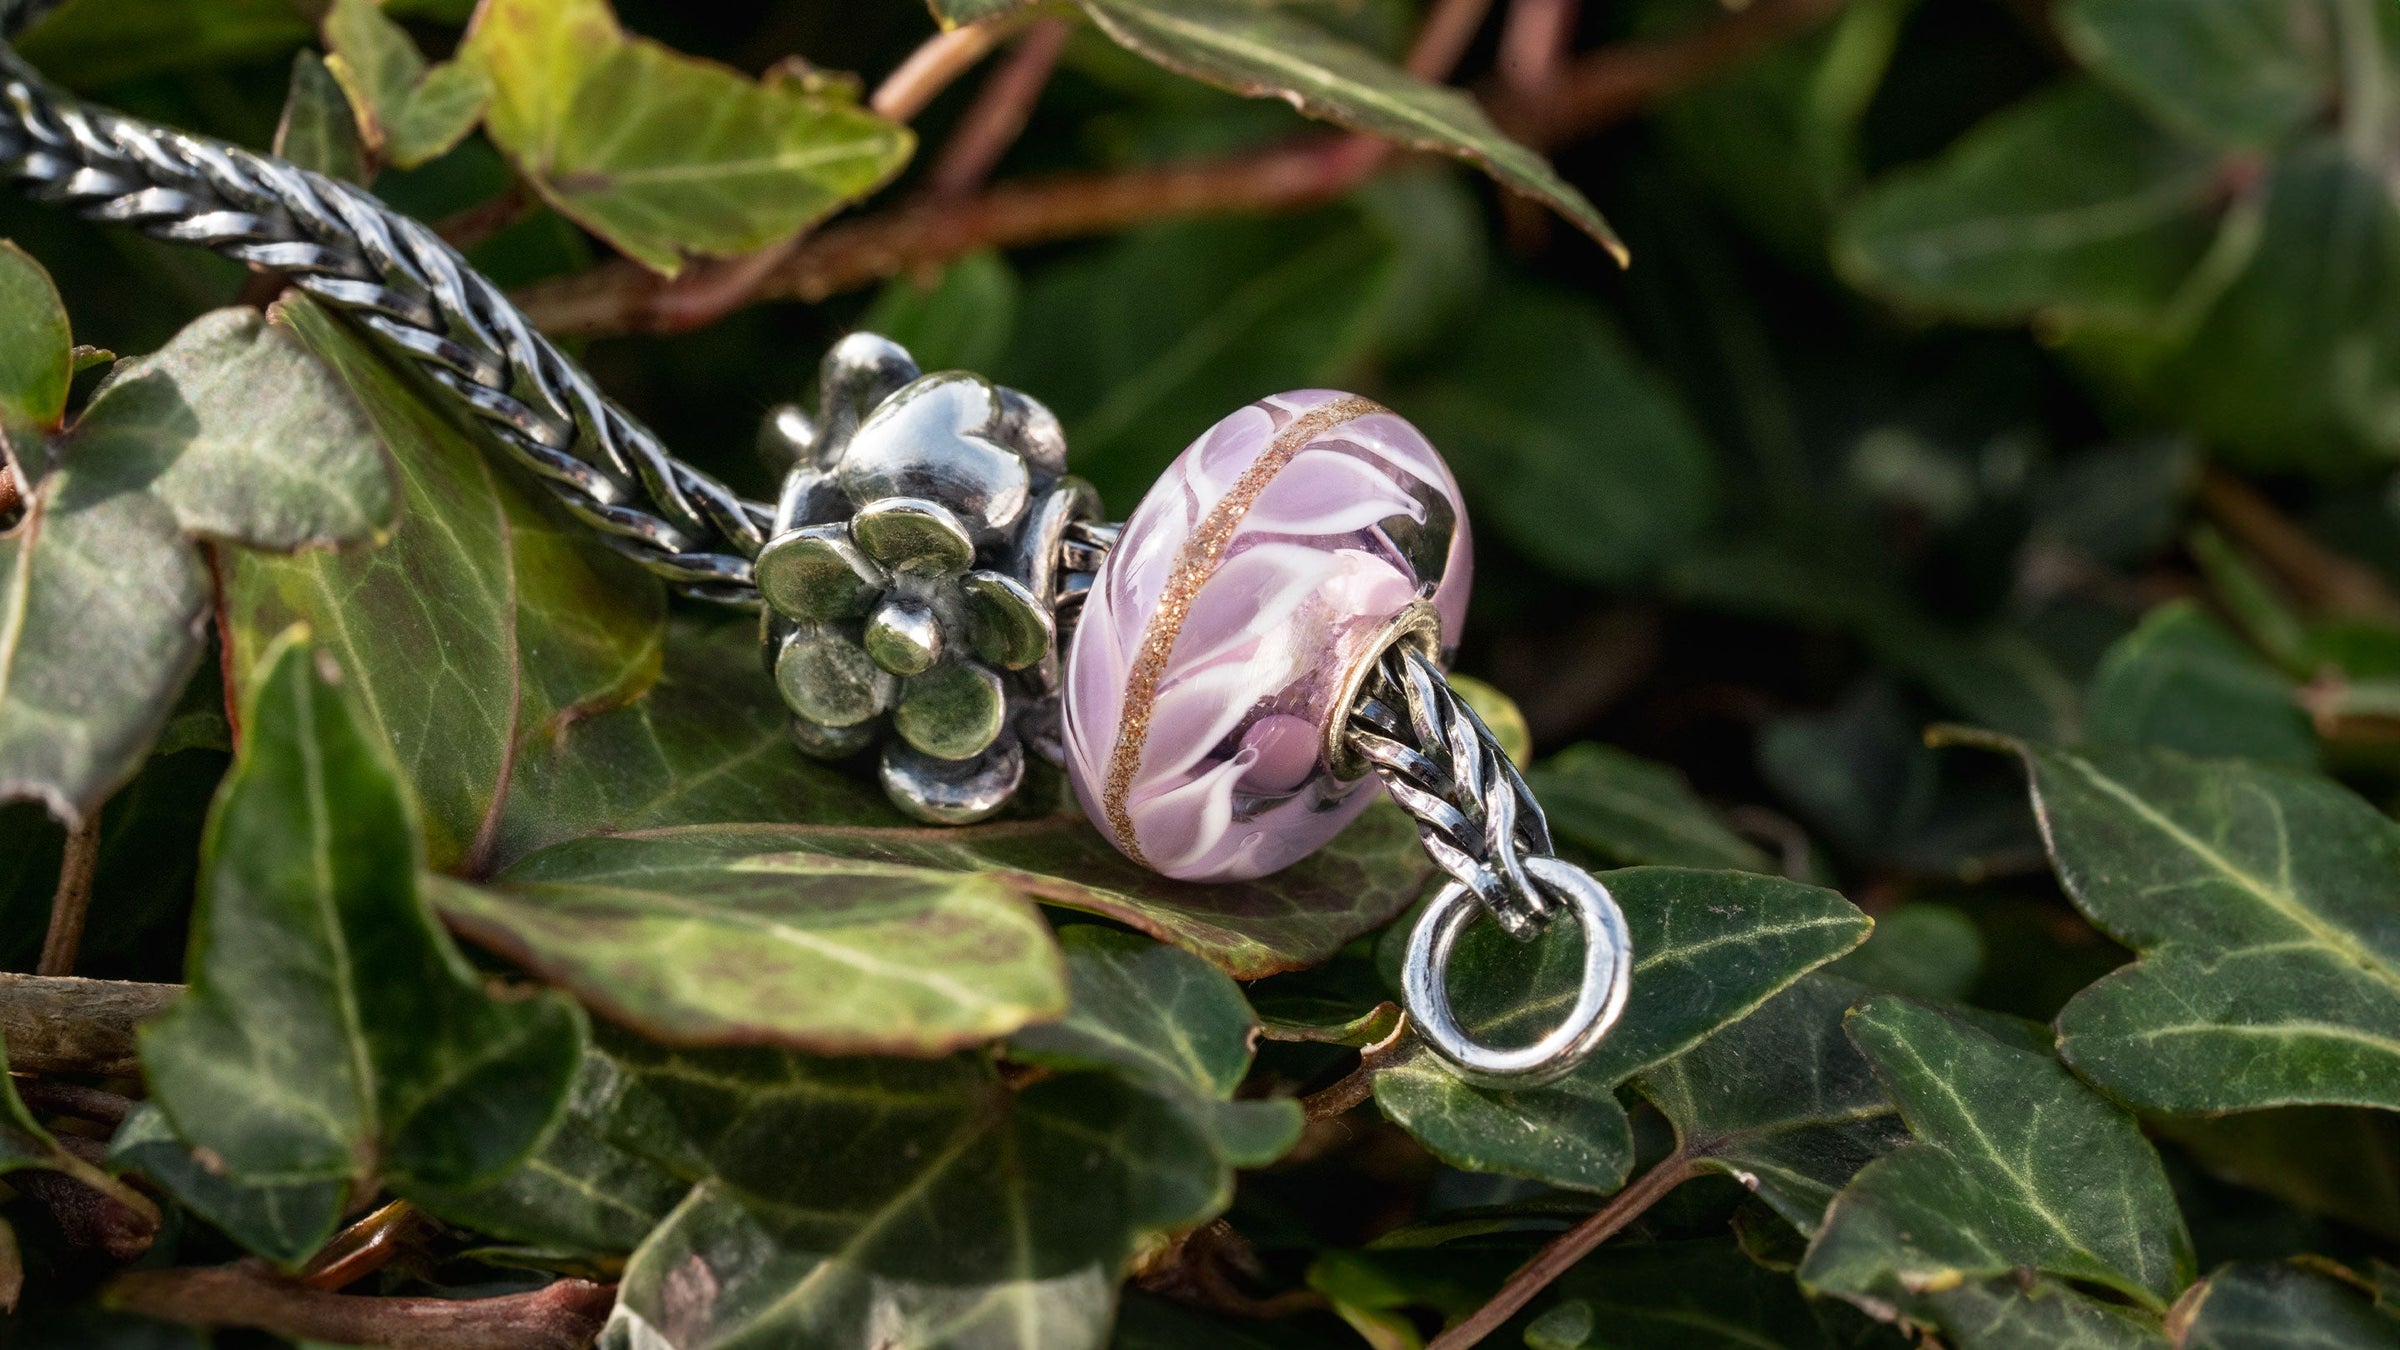 Trollbeads Heartfelt bloom silver bead & Lavender Love glass bead on a bead of leaves